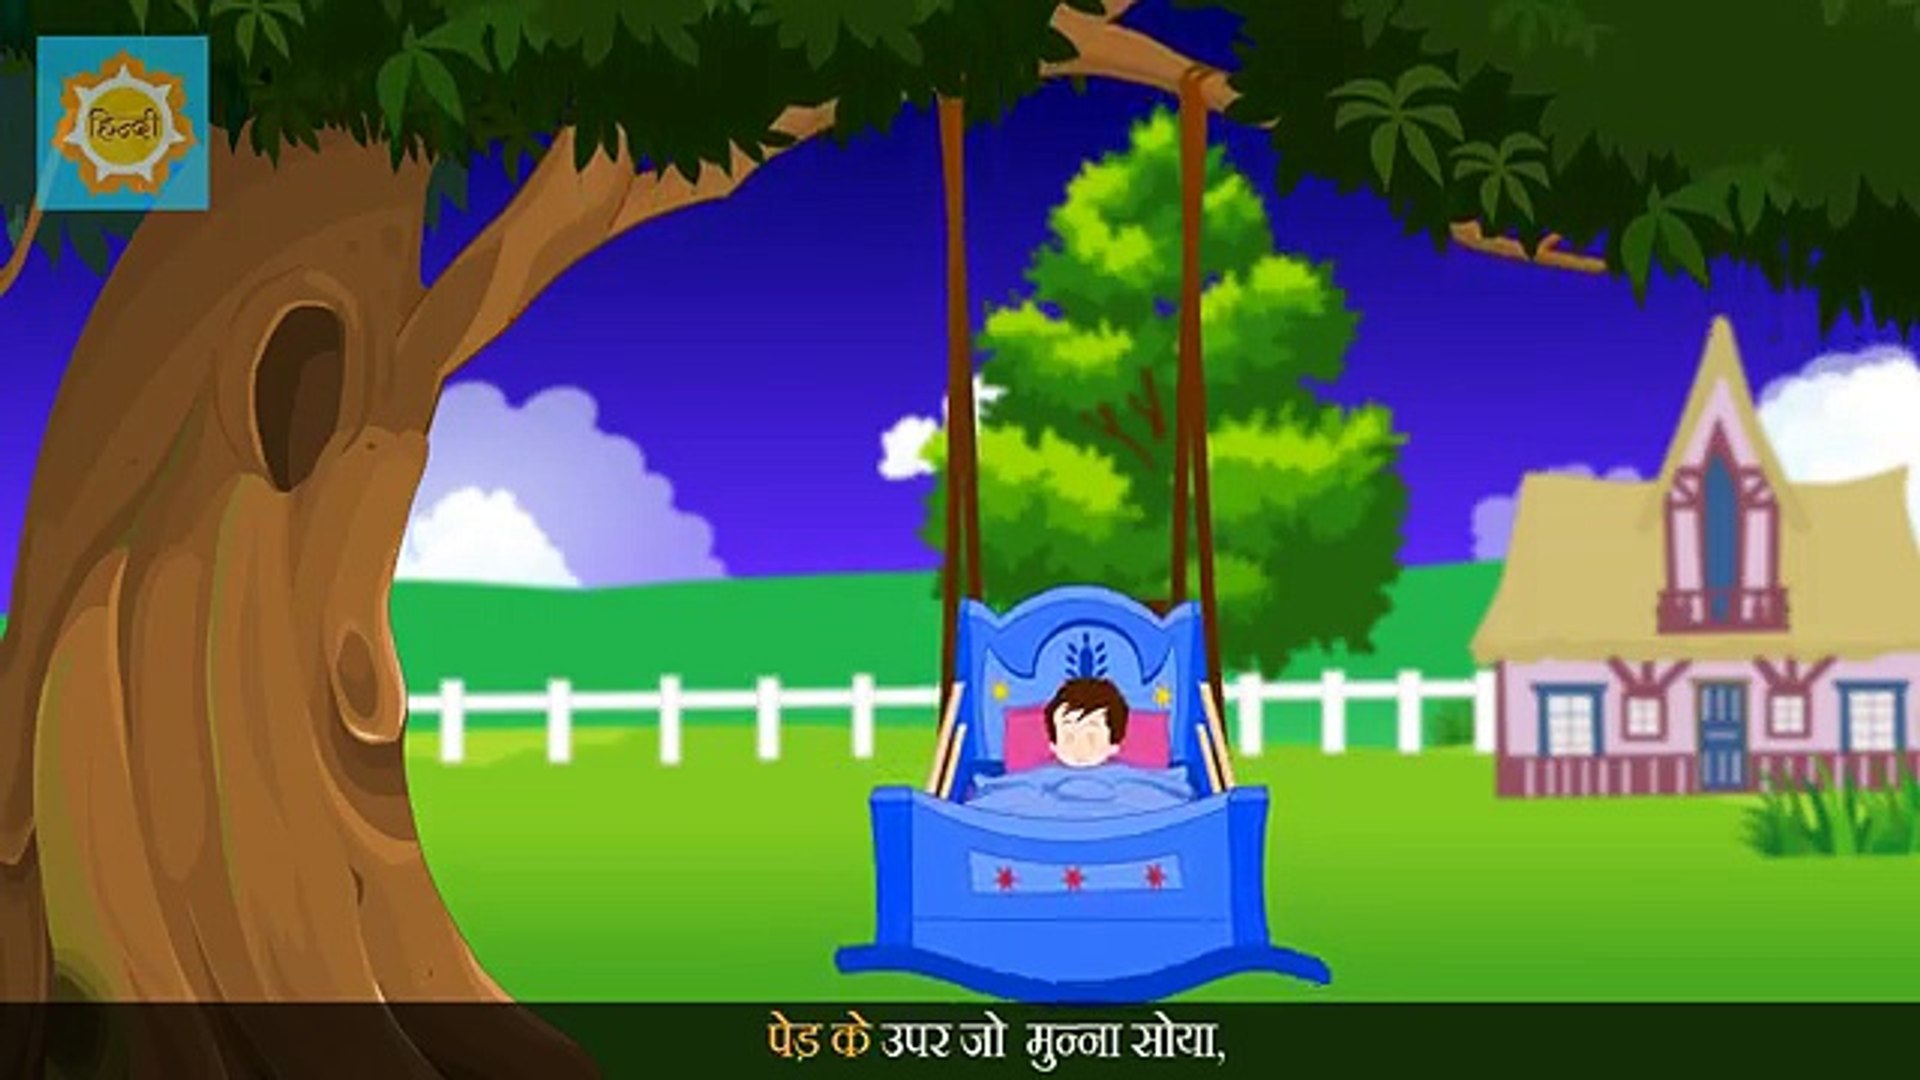 Rock A Bye Baby in Hindi | Hindi Nursery Rhyme | Popular English Rhymes in Hindi